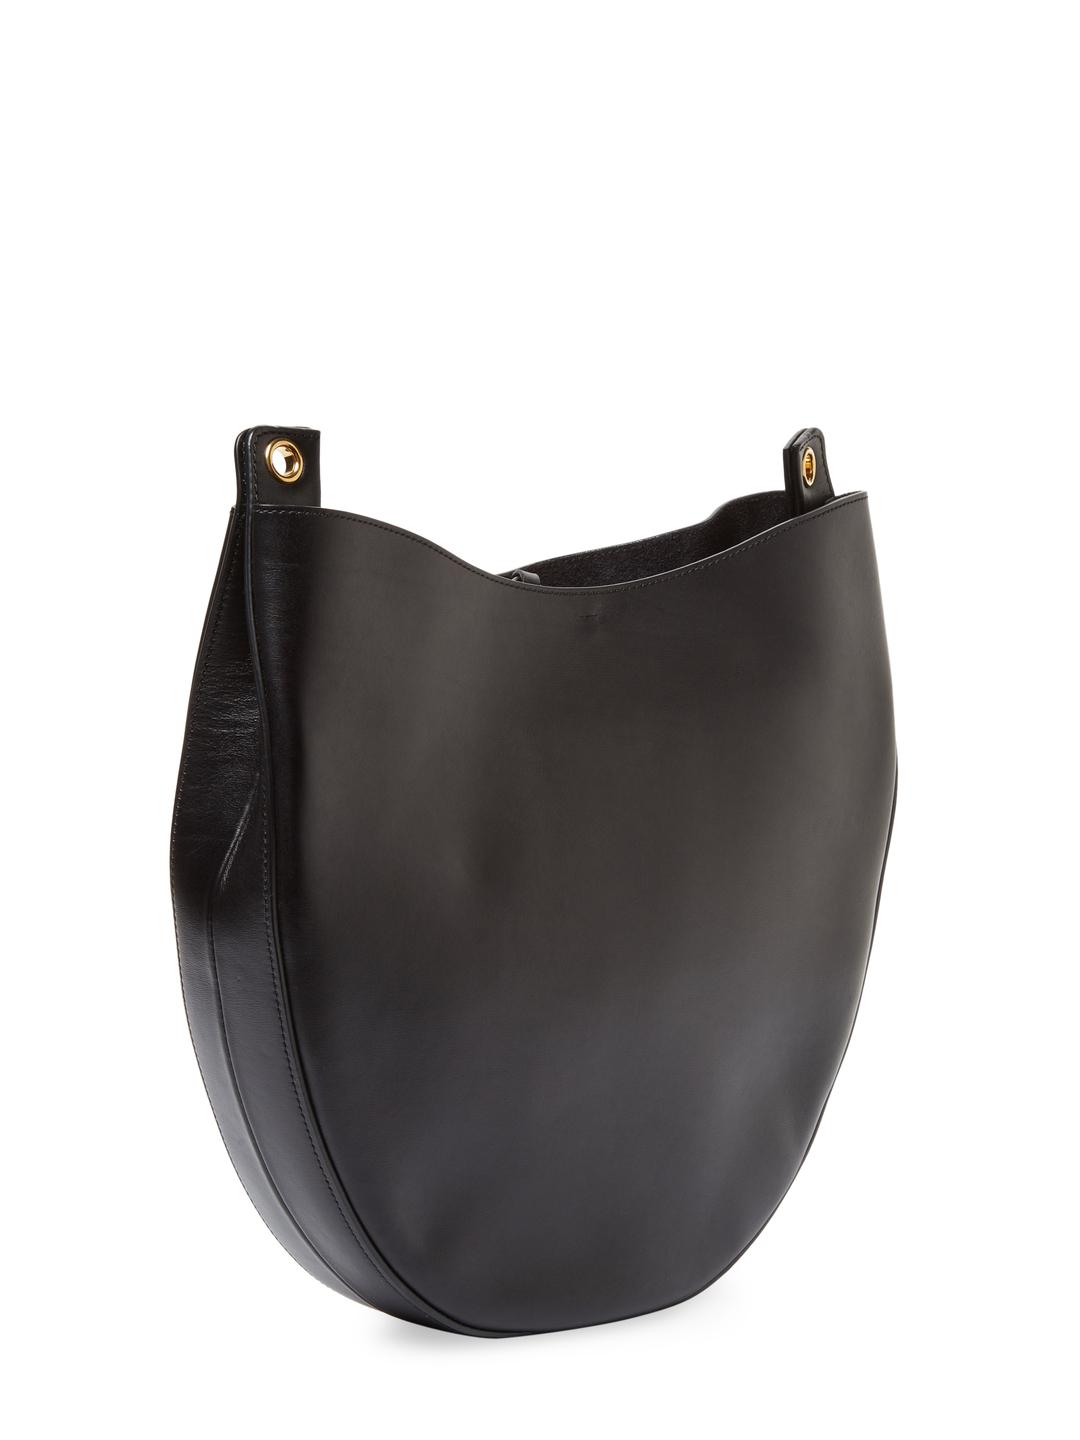 Celine Medium Calfskin Leather Hobo Bag in Black - Lyst